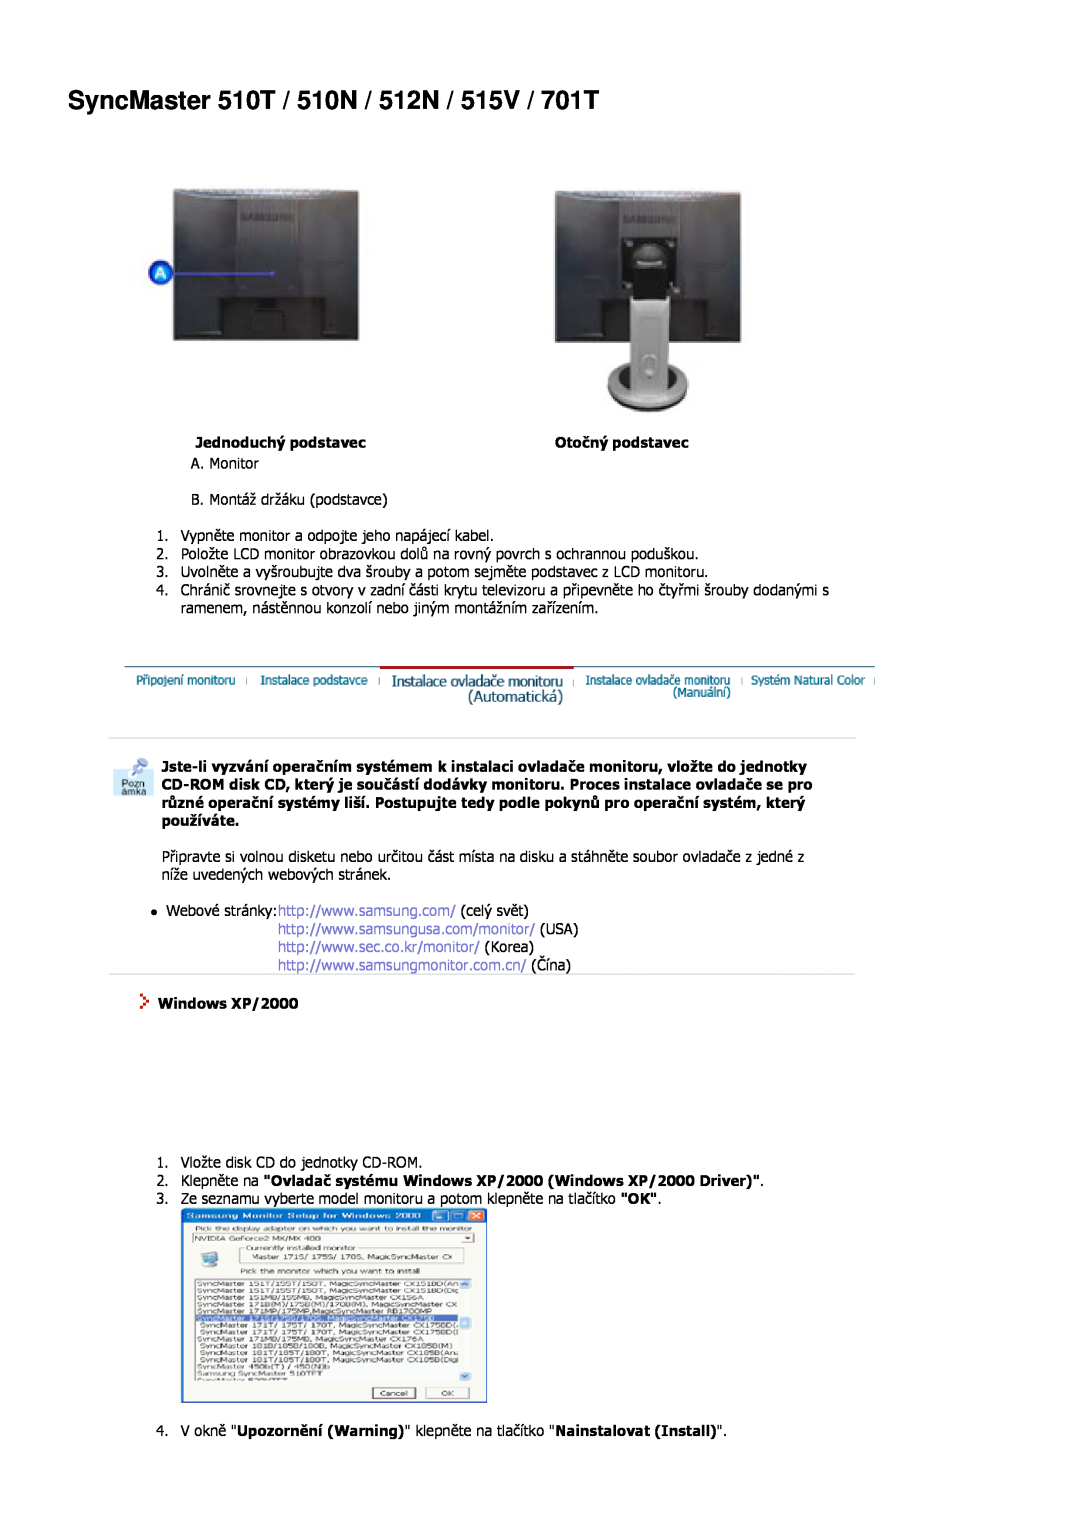 Samsung MJ19BSSSQ/EDC, MJ17ASKN/EDC SyncMaster 510T / 510N / 512N / 515V / 701T, Jednoduchý podstavec, Windows XP/2000 